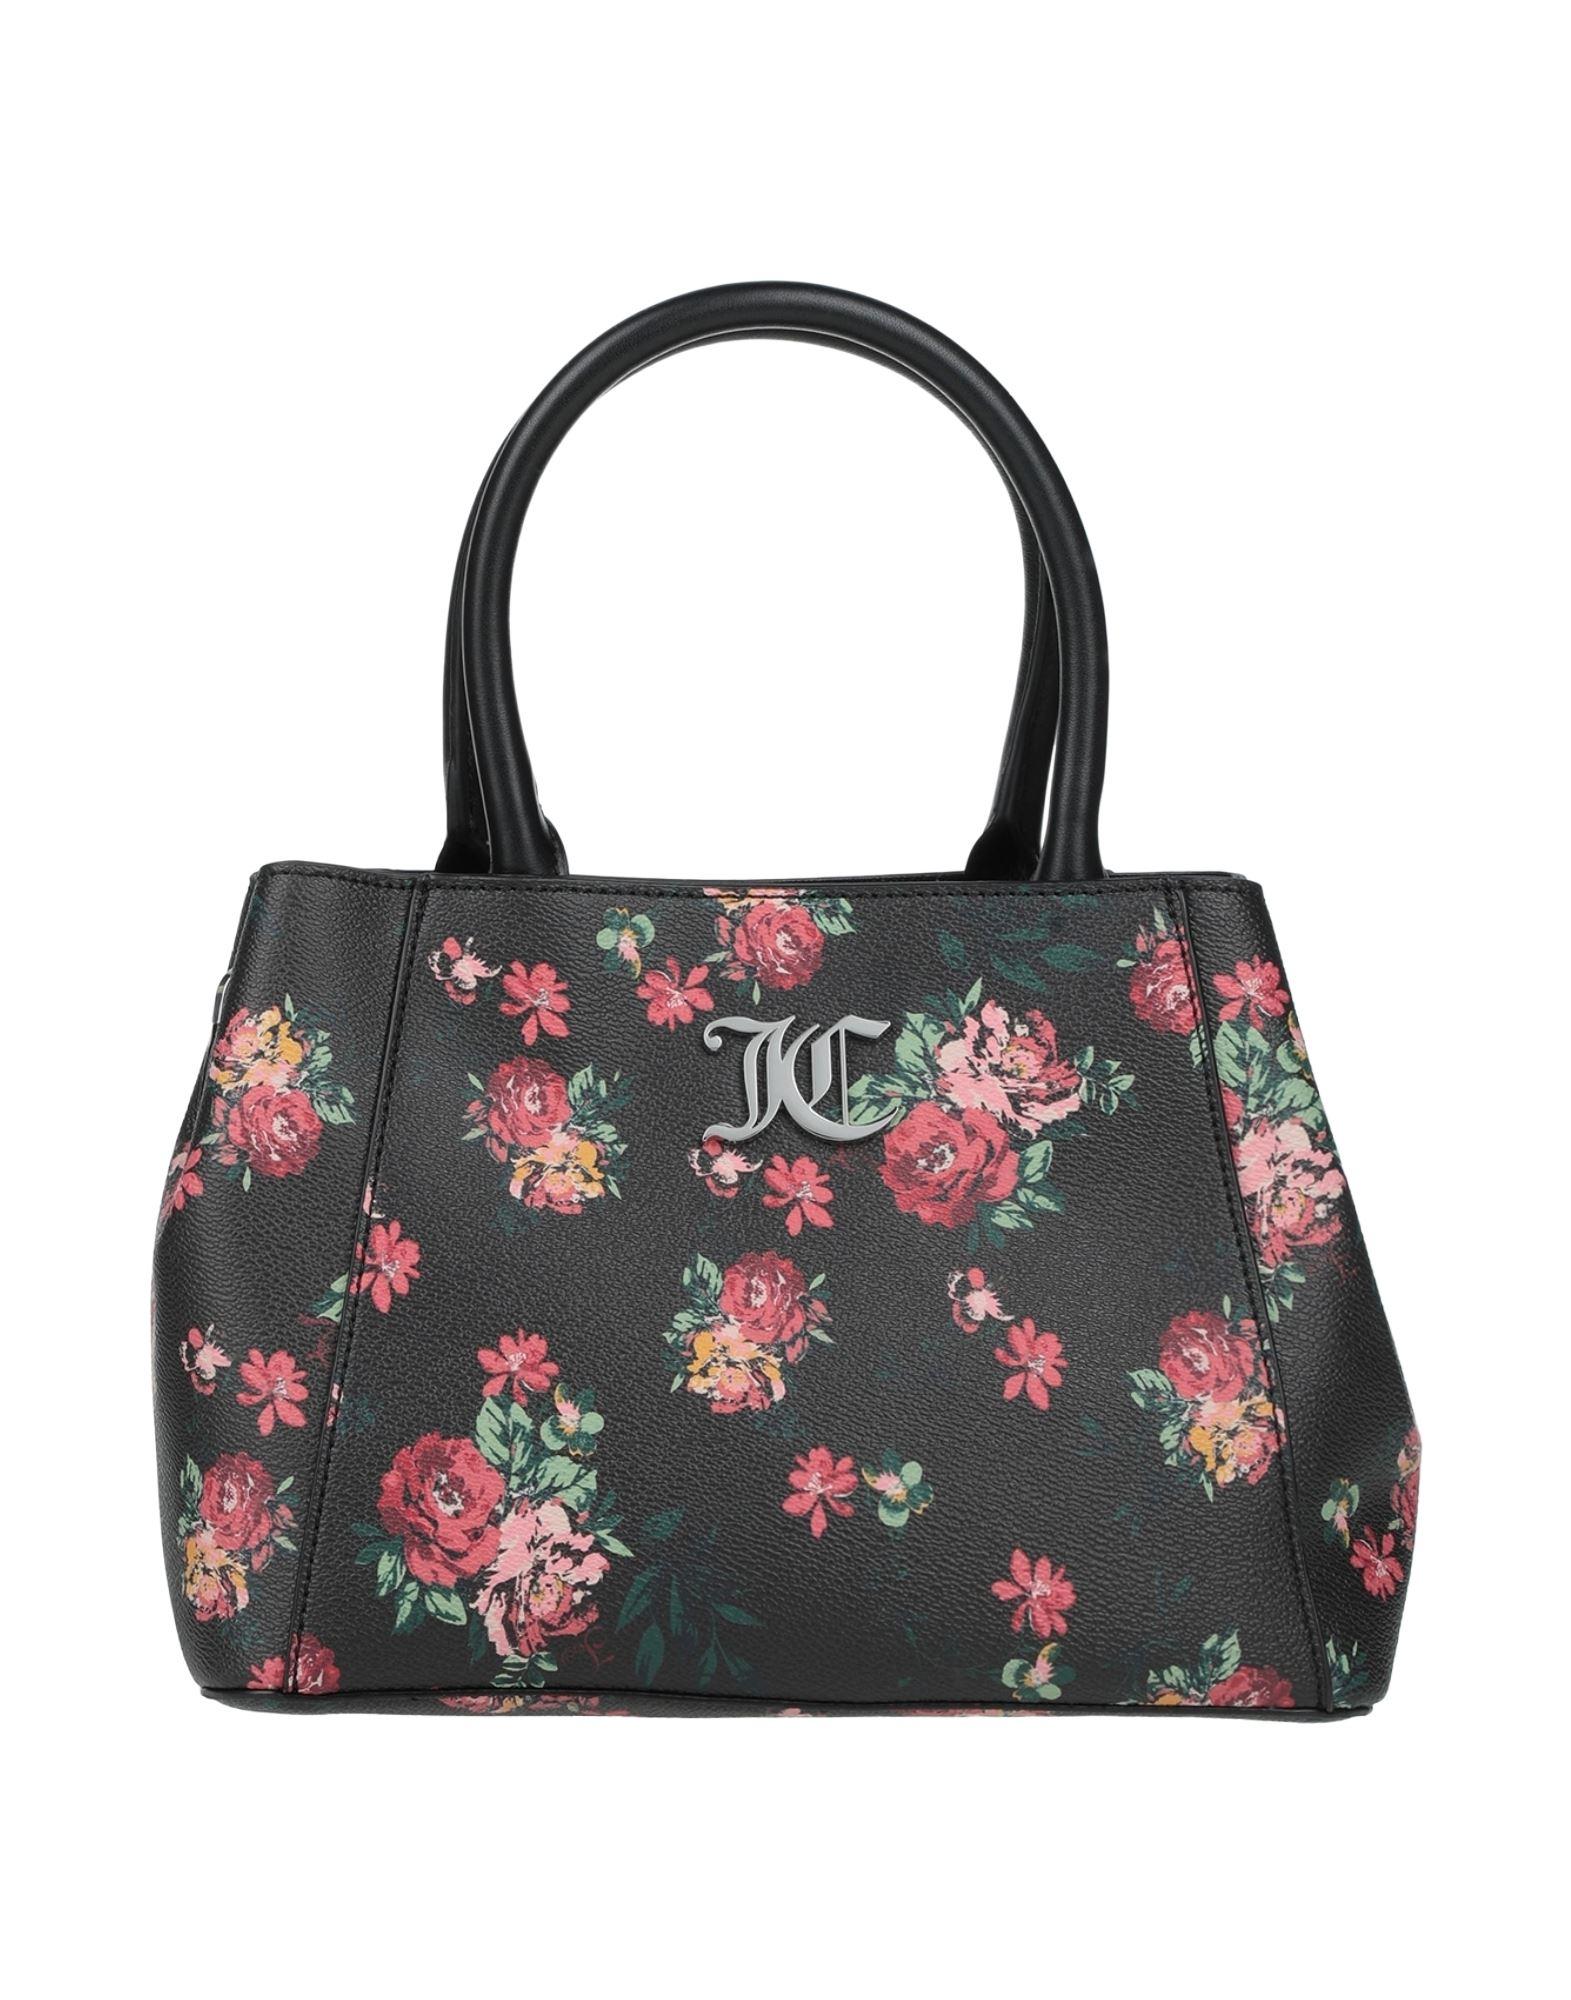 Juicy Couture Zipped Pocket Tote Bags | Mercari